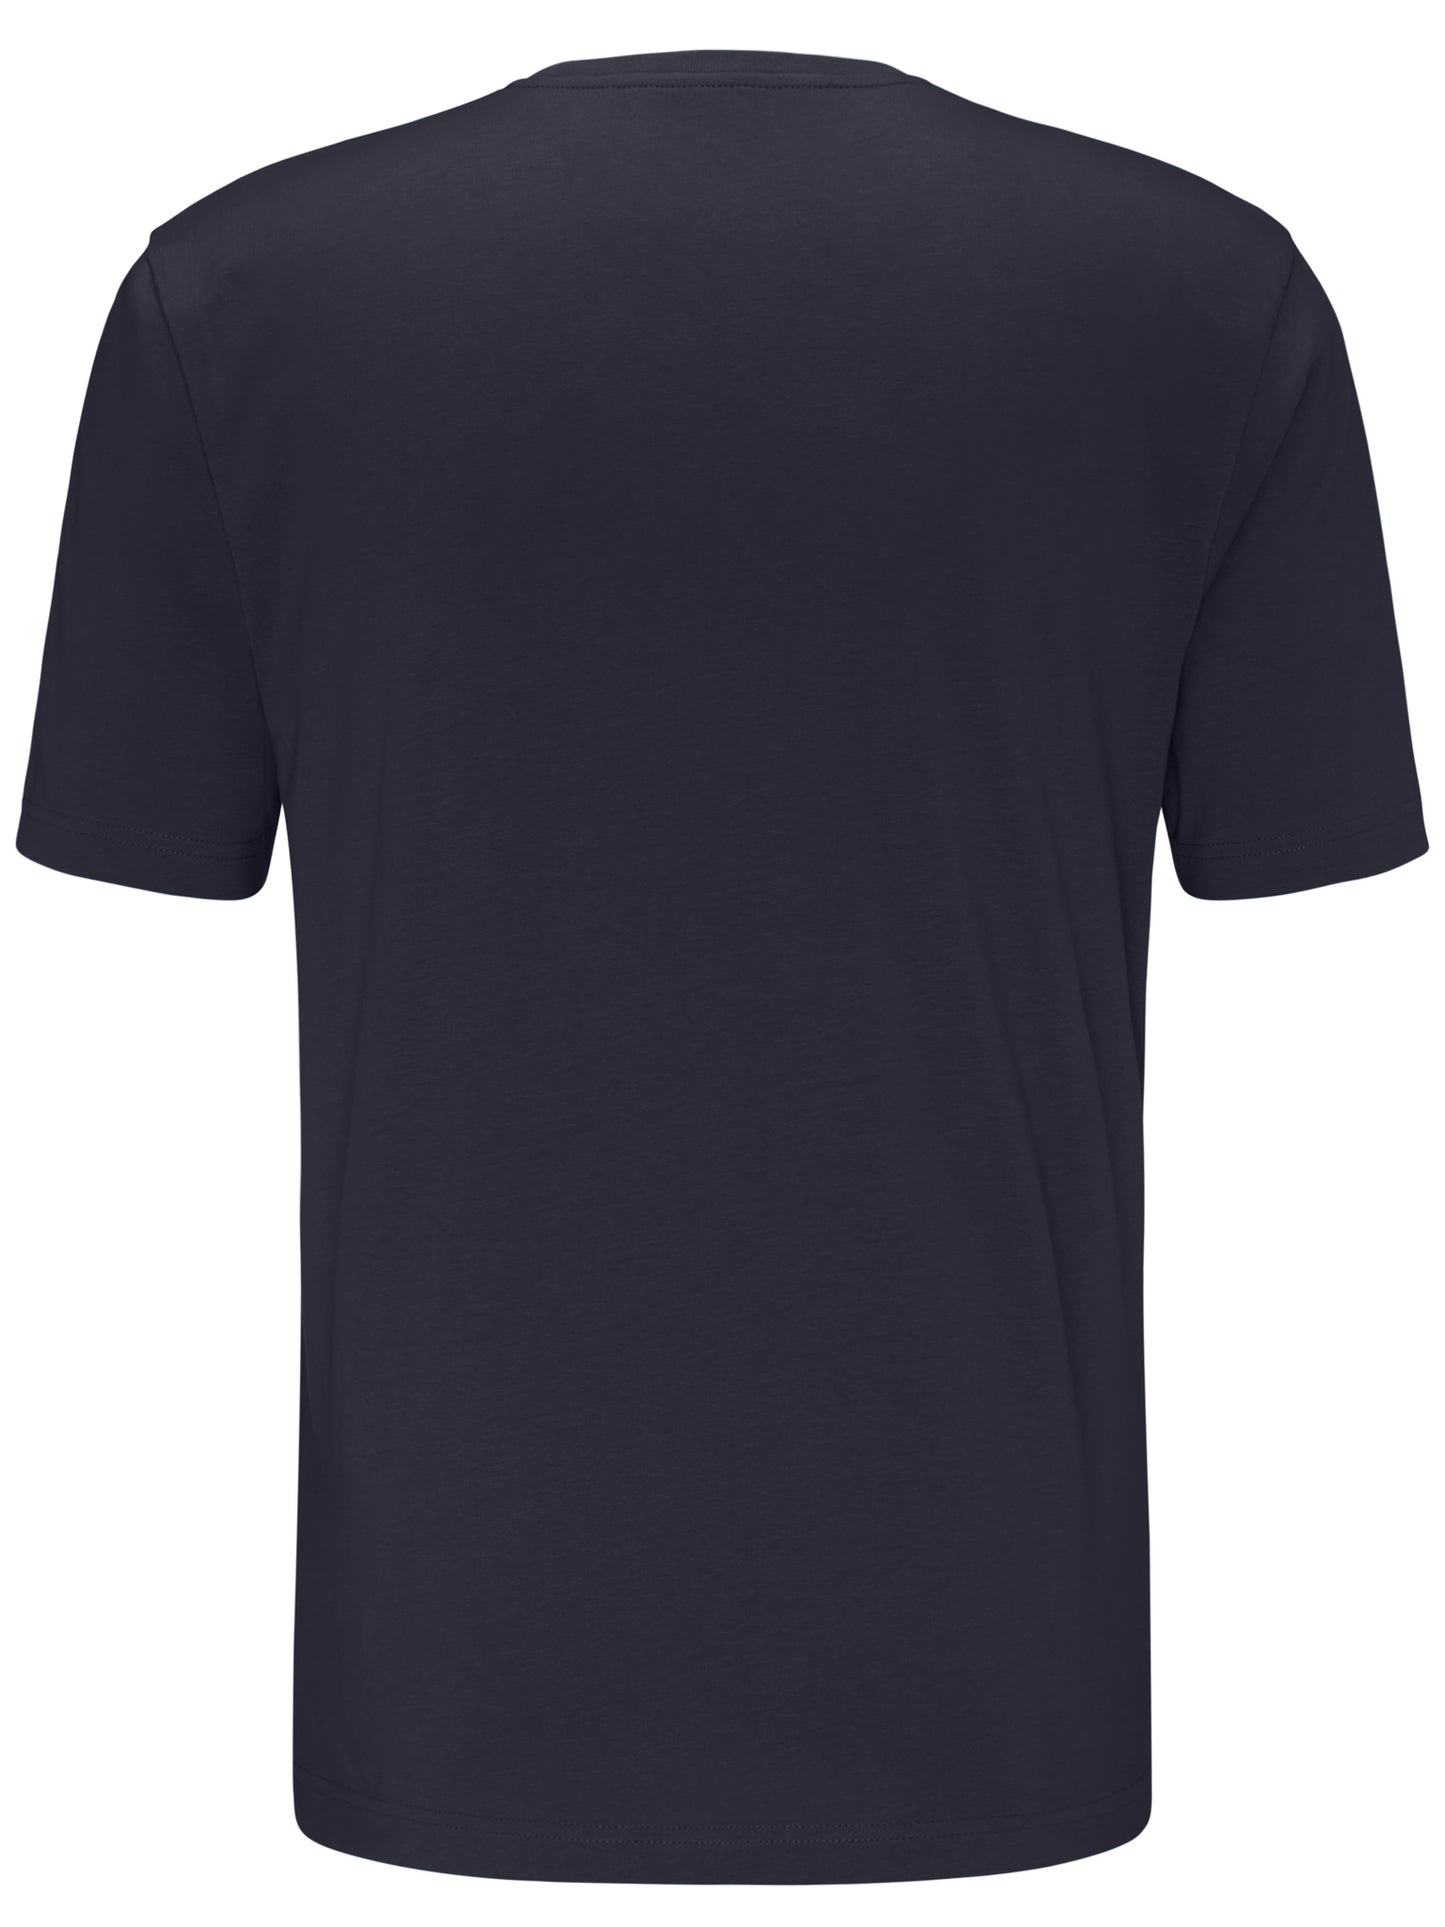 Fynch Hatton, the T-Shirt, Crew Neck - Navy